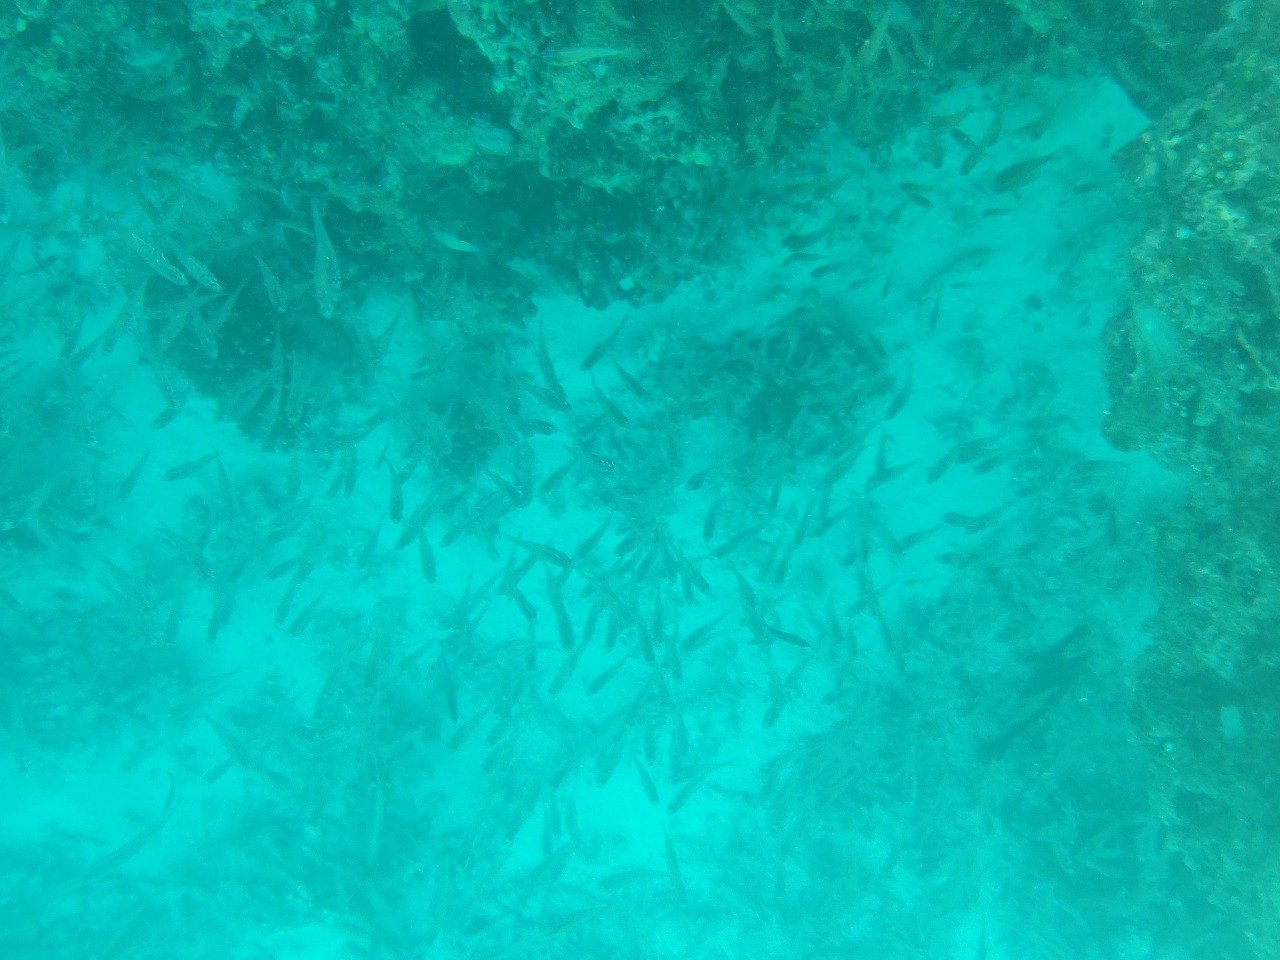 The corals at Kadmat Island